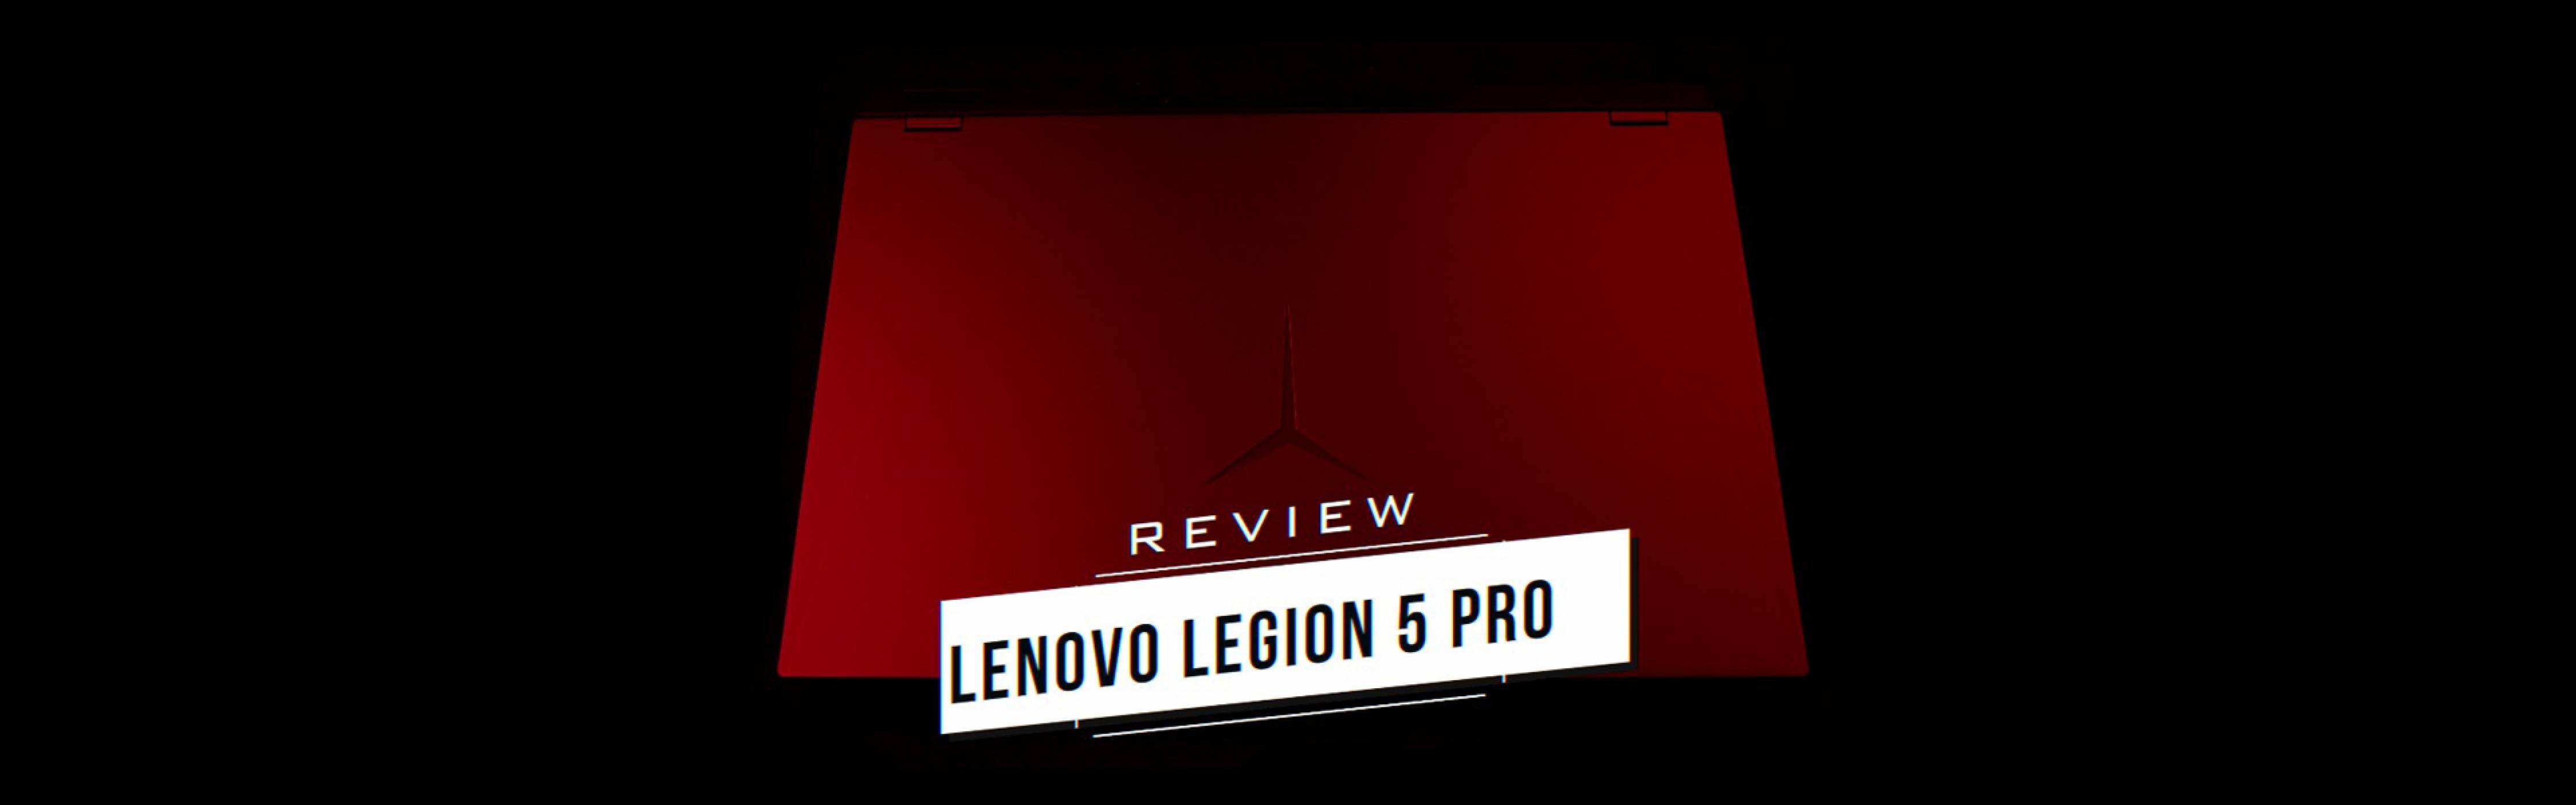 Lenovo Legion 5 Pro 2021: ултимативният геймърски лаптоп (ВИДЕО РЕВЮ)